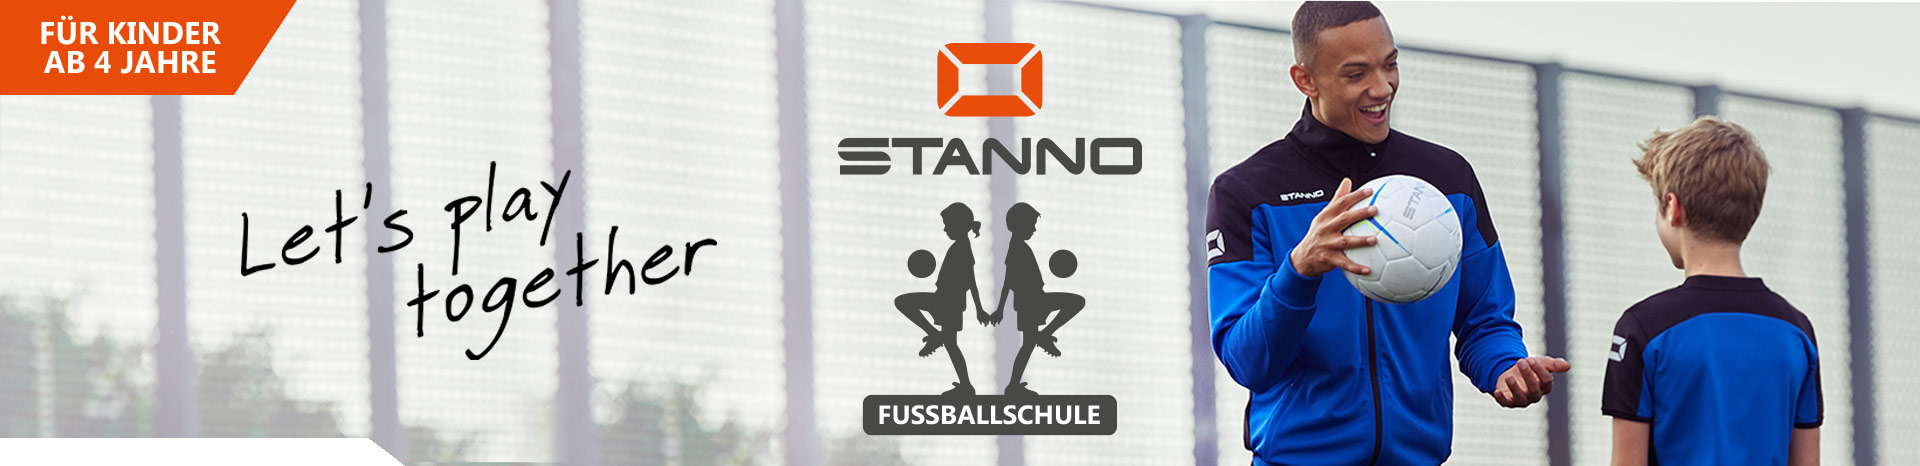 Bewerbung STANNO-Fussballschule